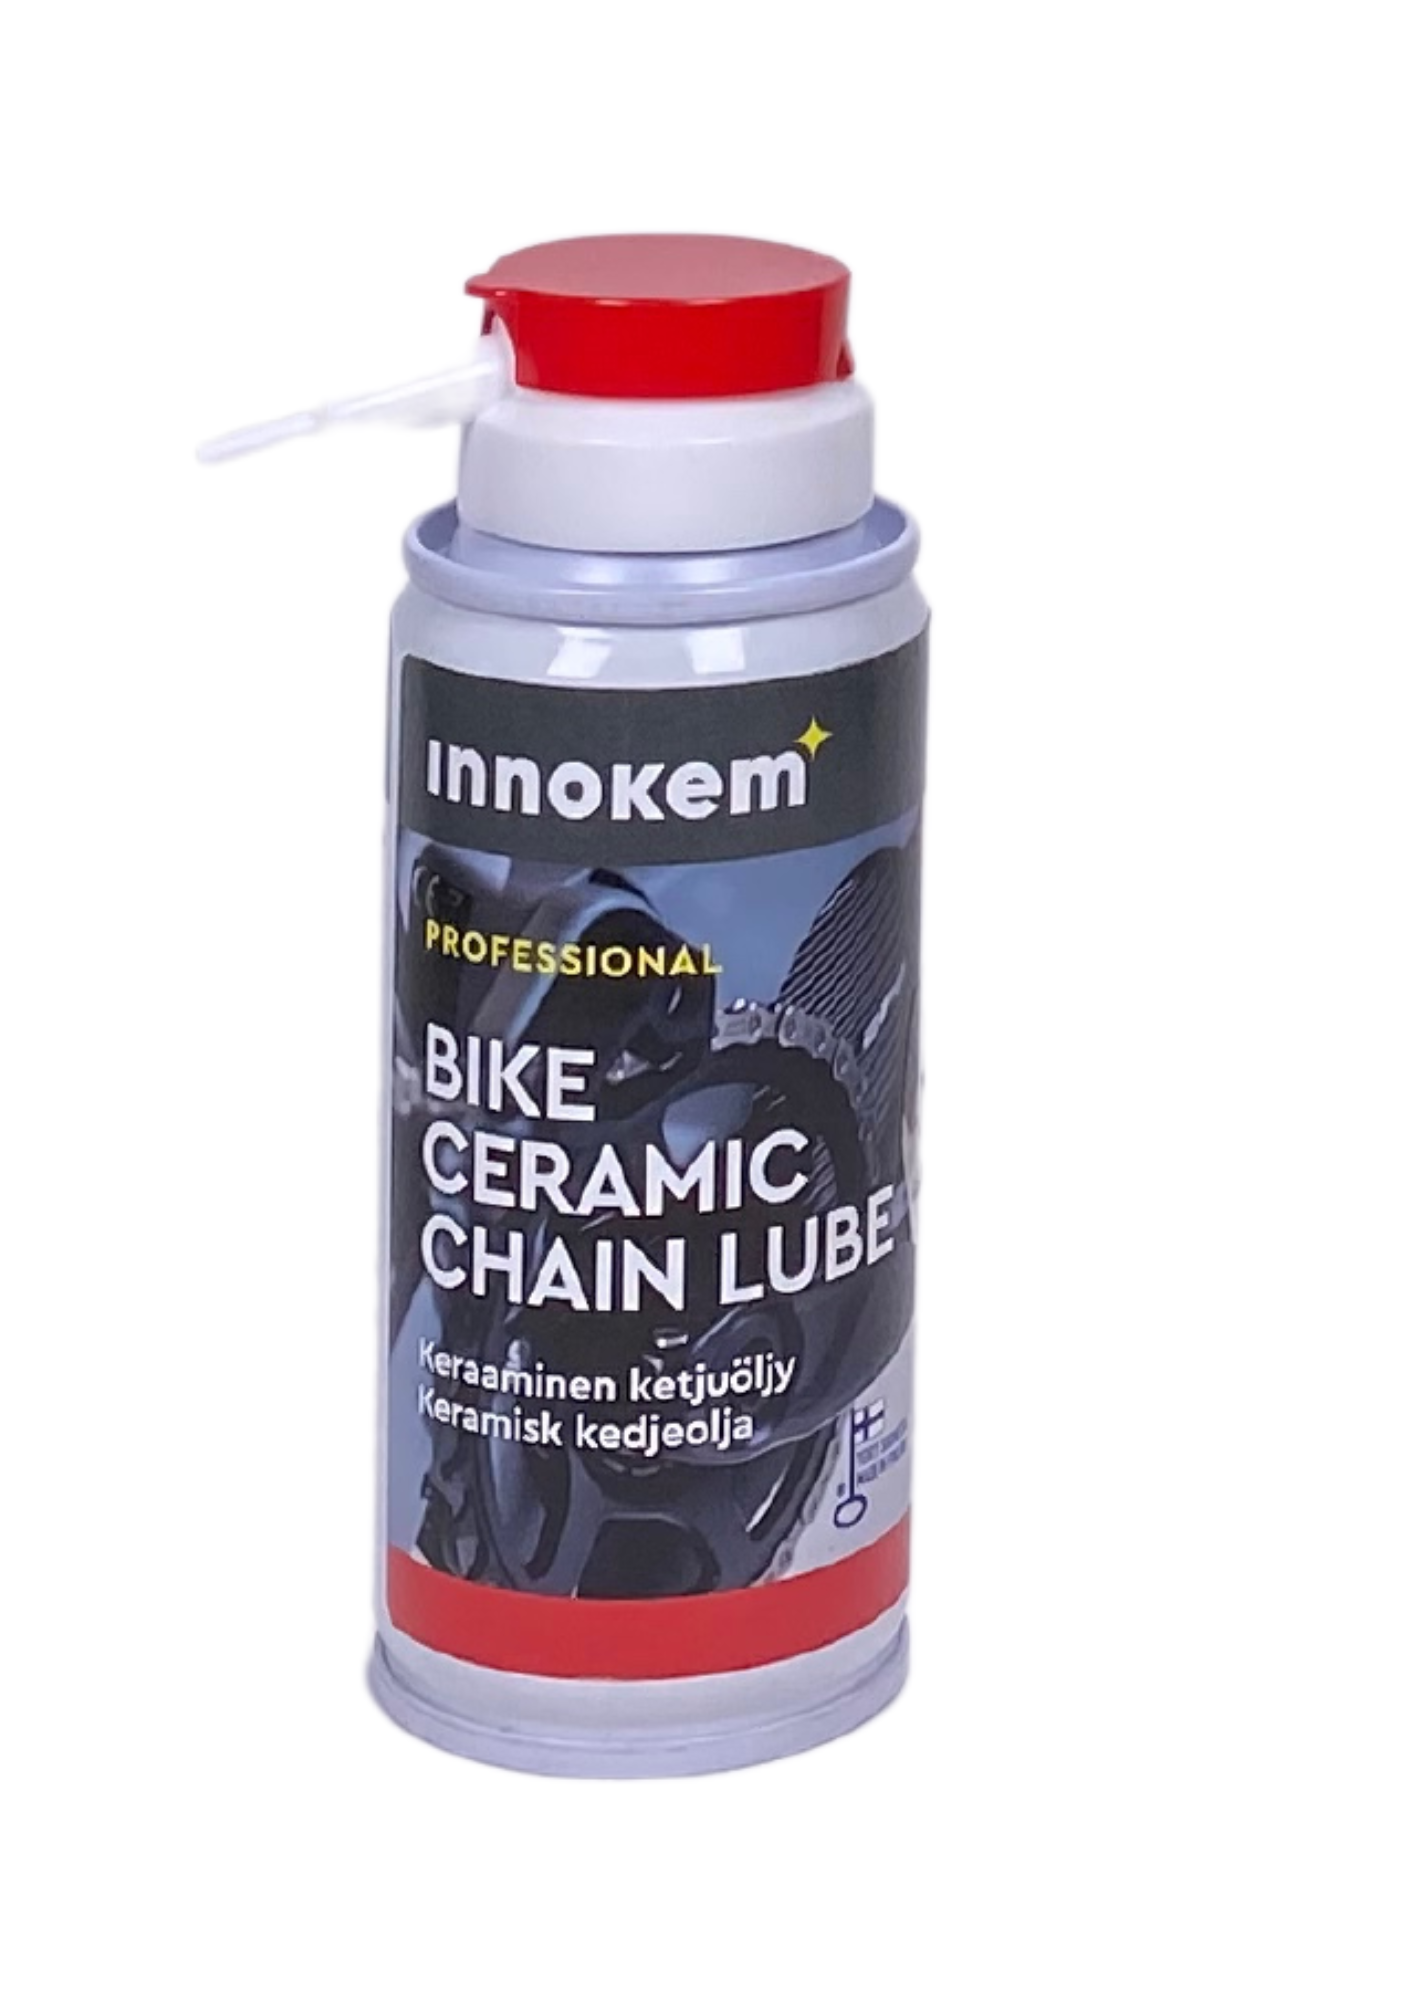 INNOKEM Bike Ceramic Chain Lube Ketjuöljy 100ml